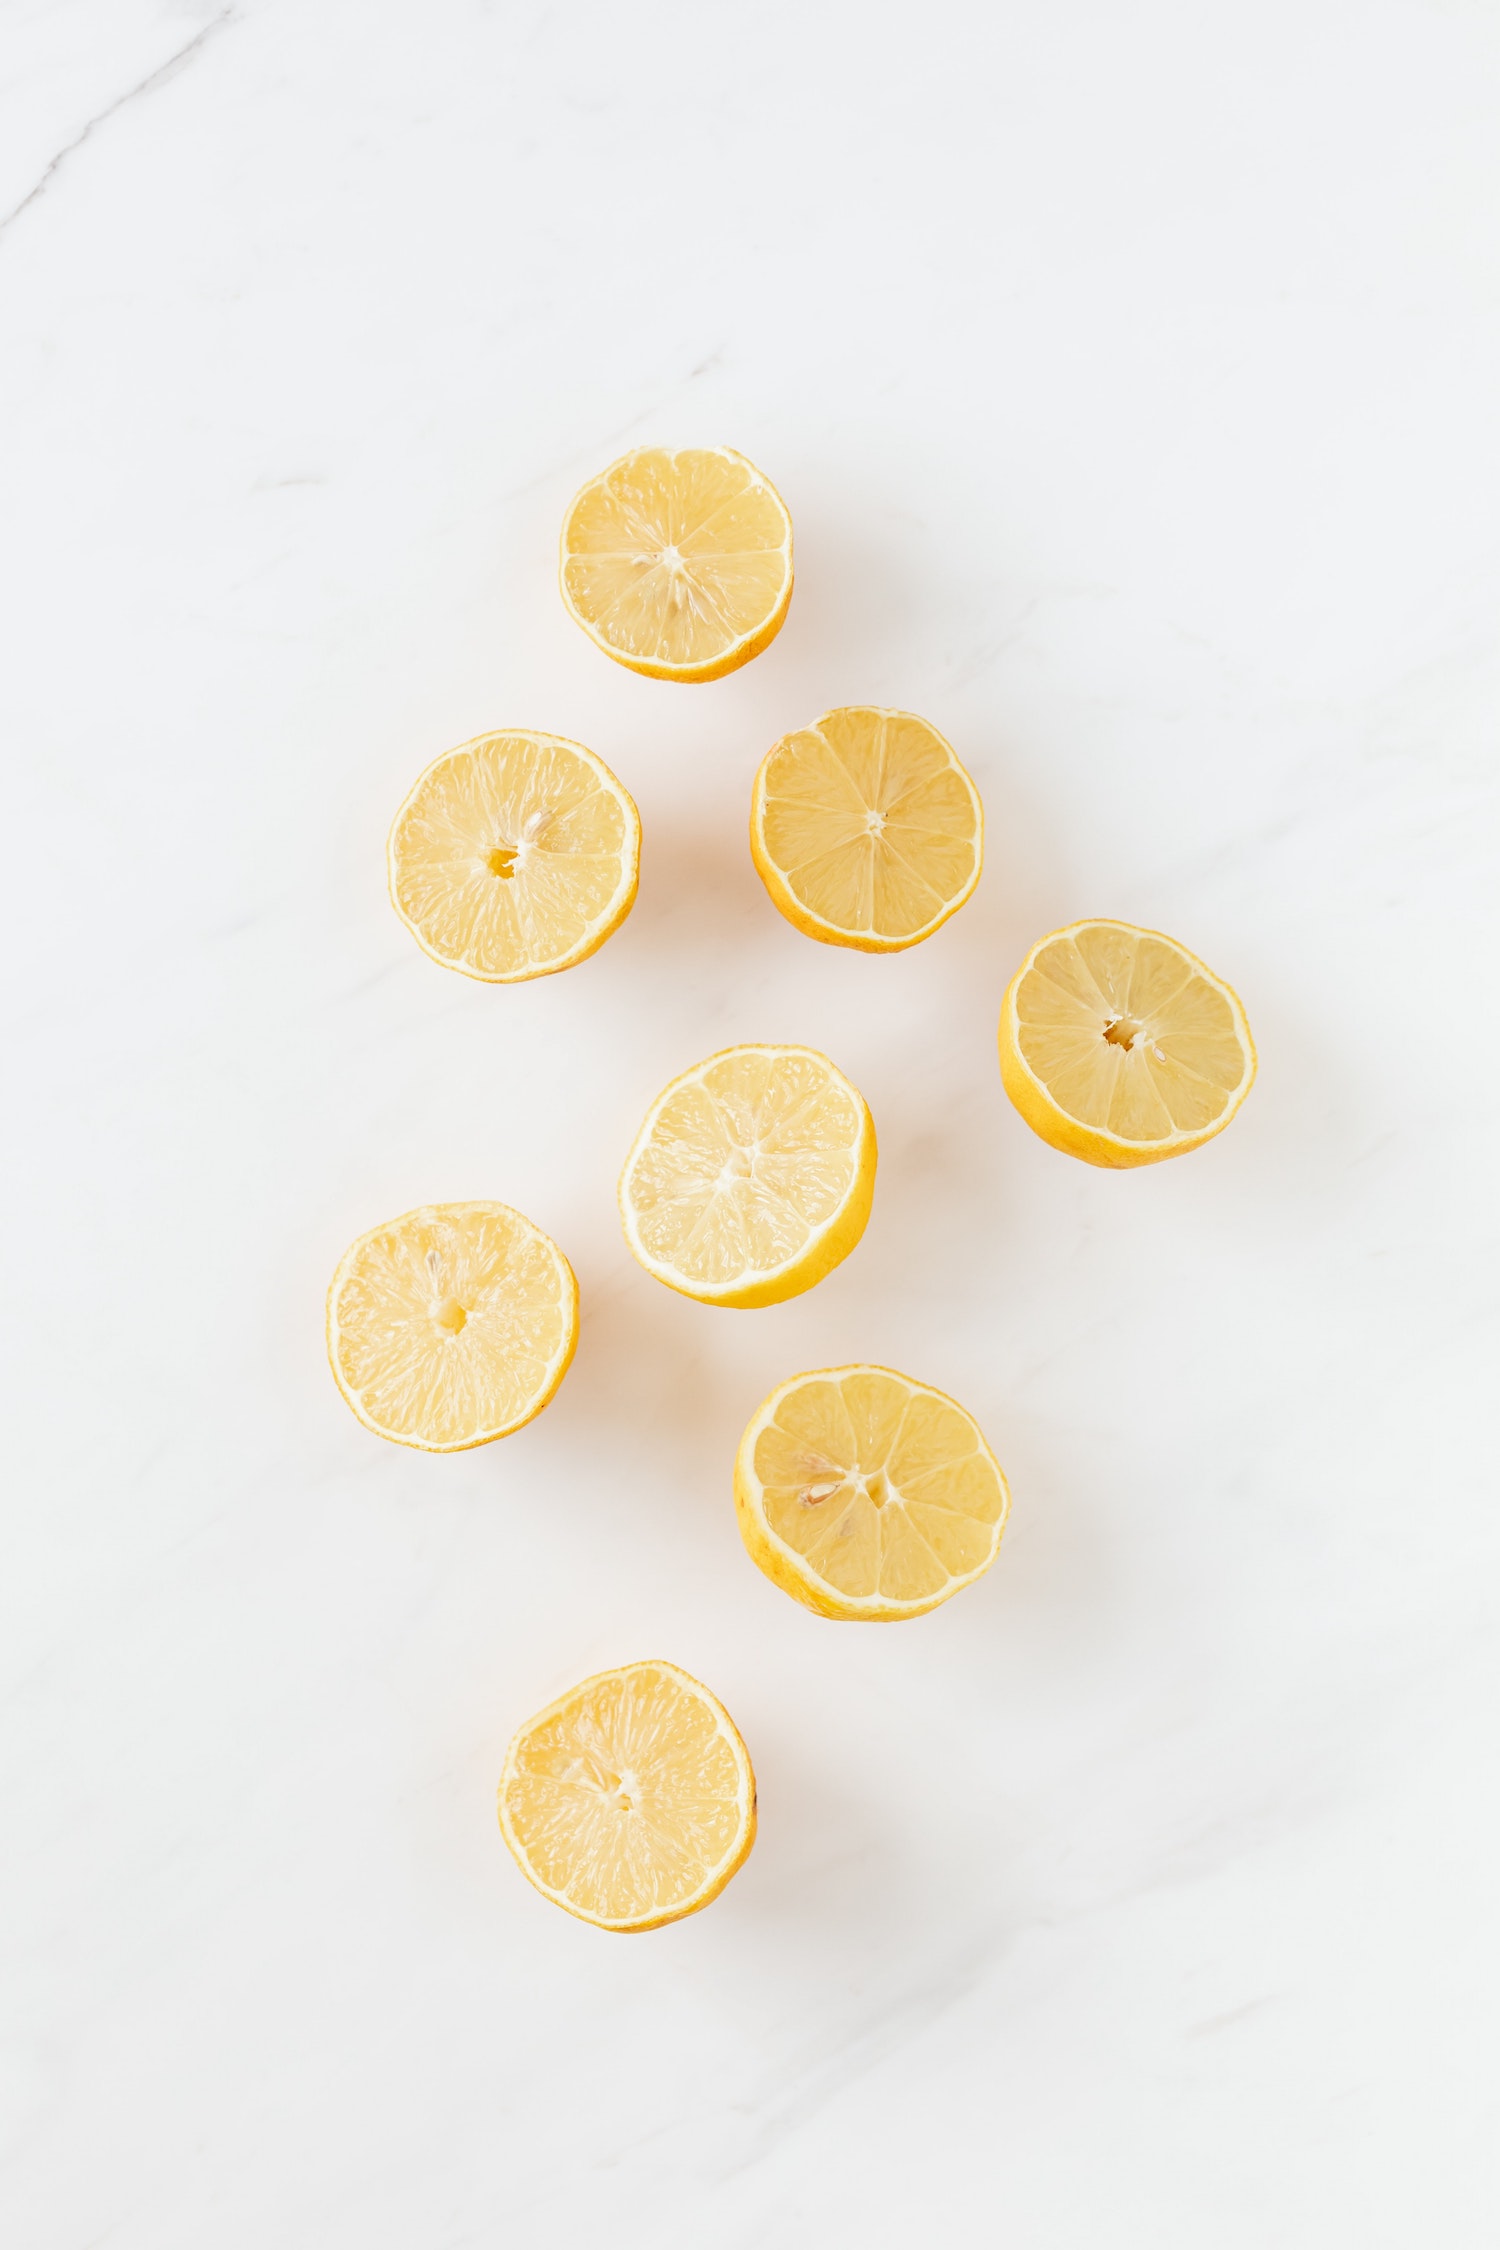 Lemon Halves